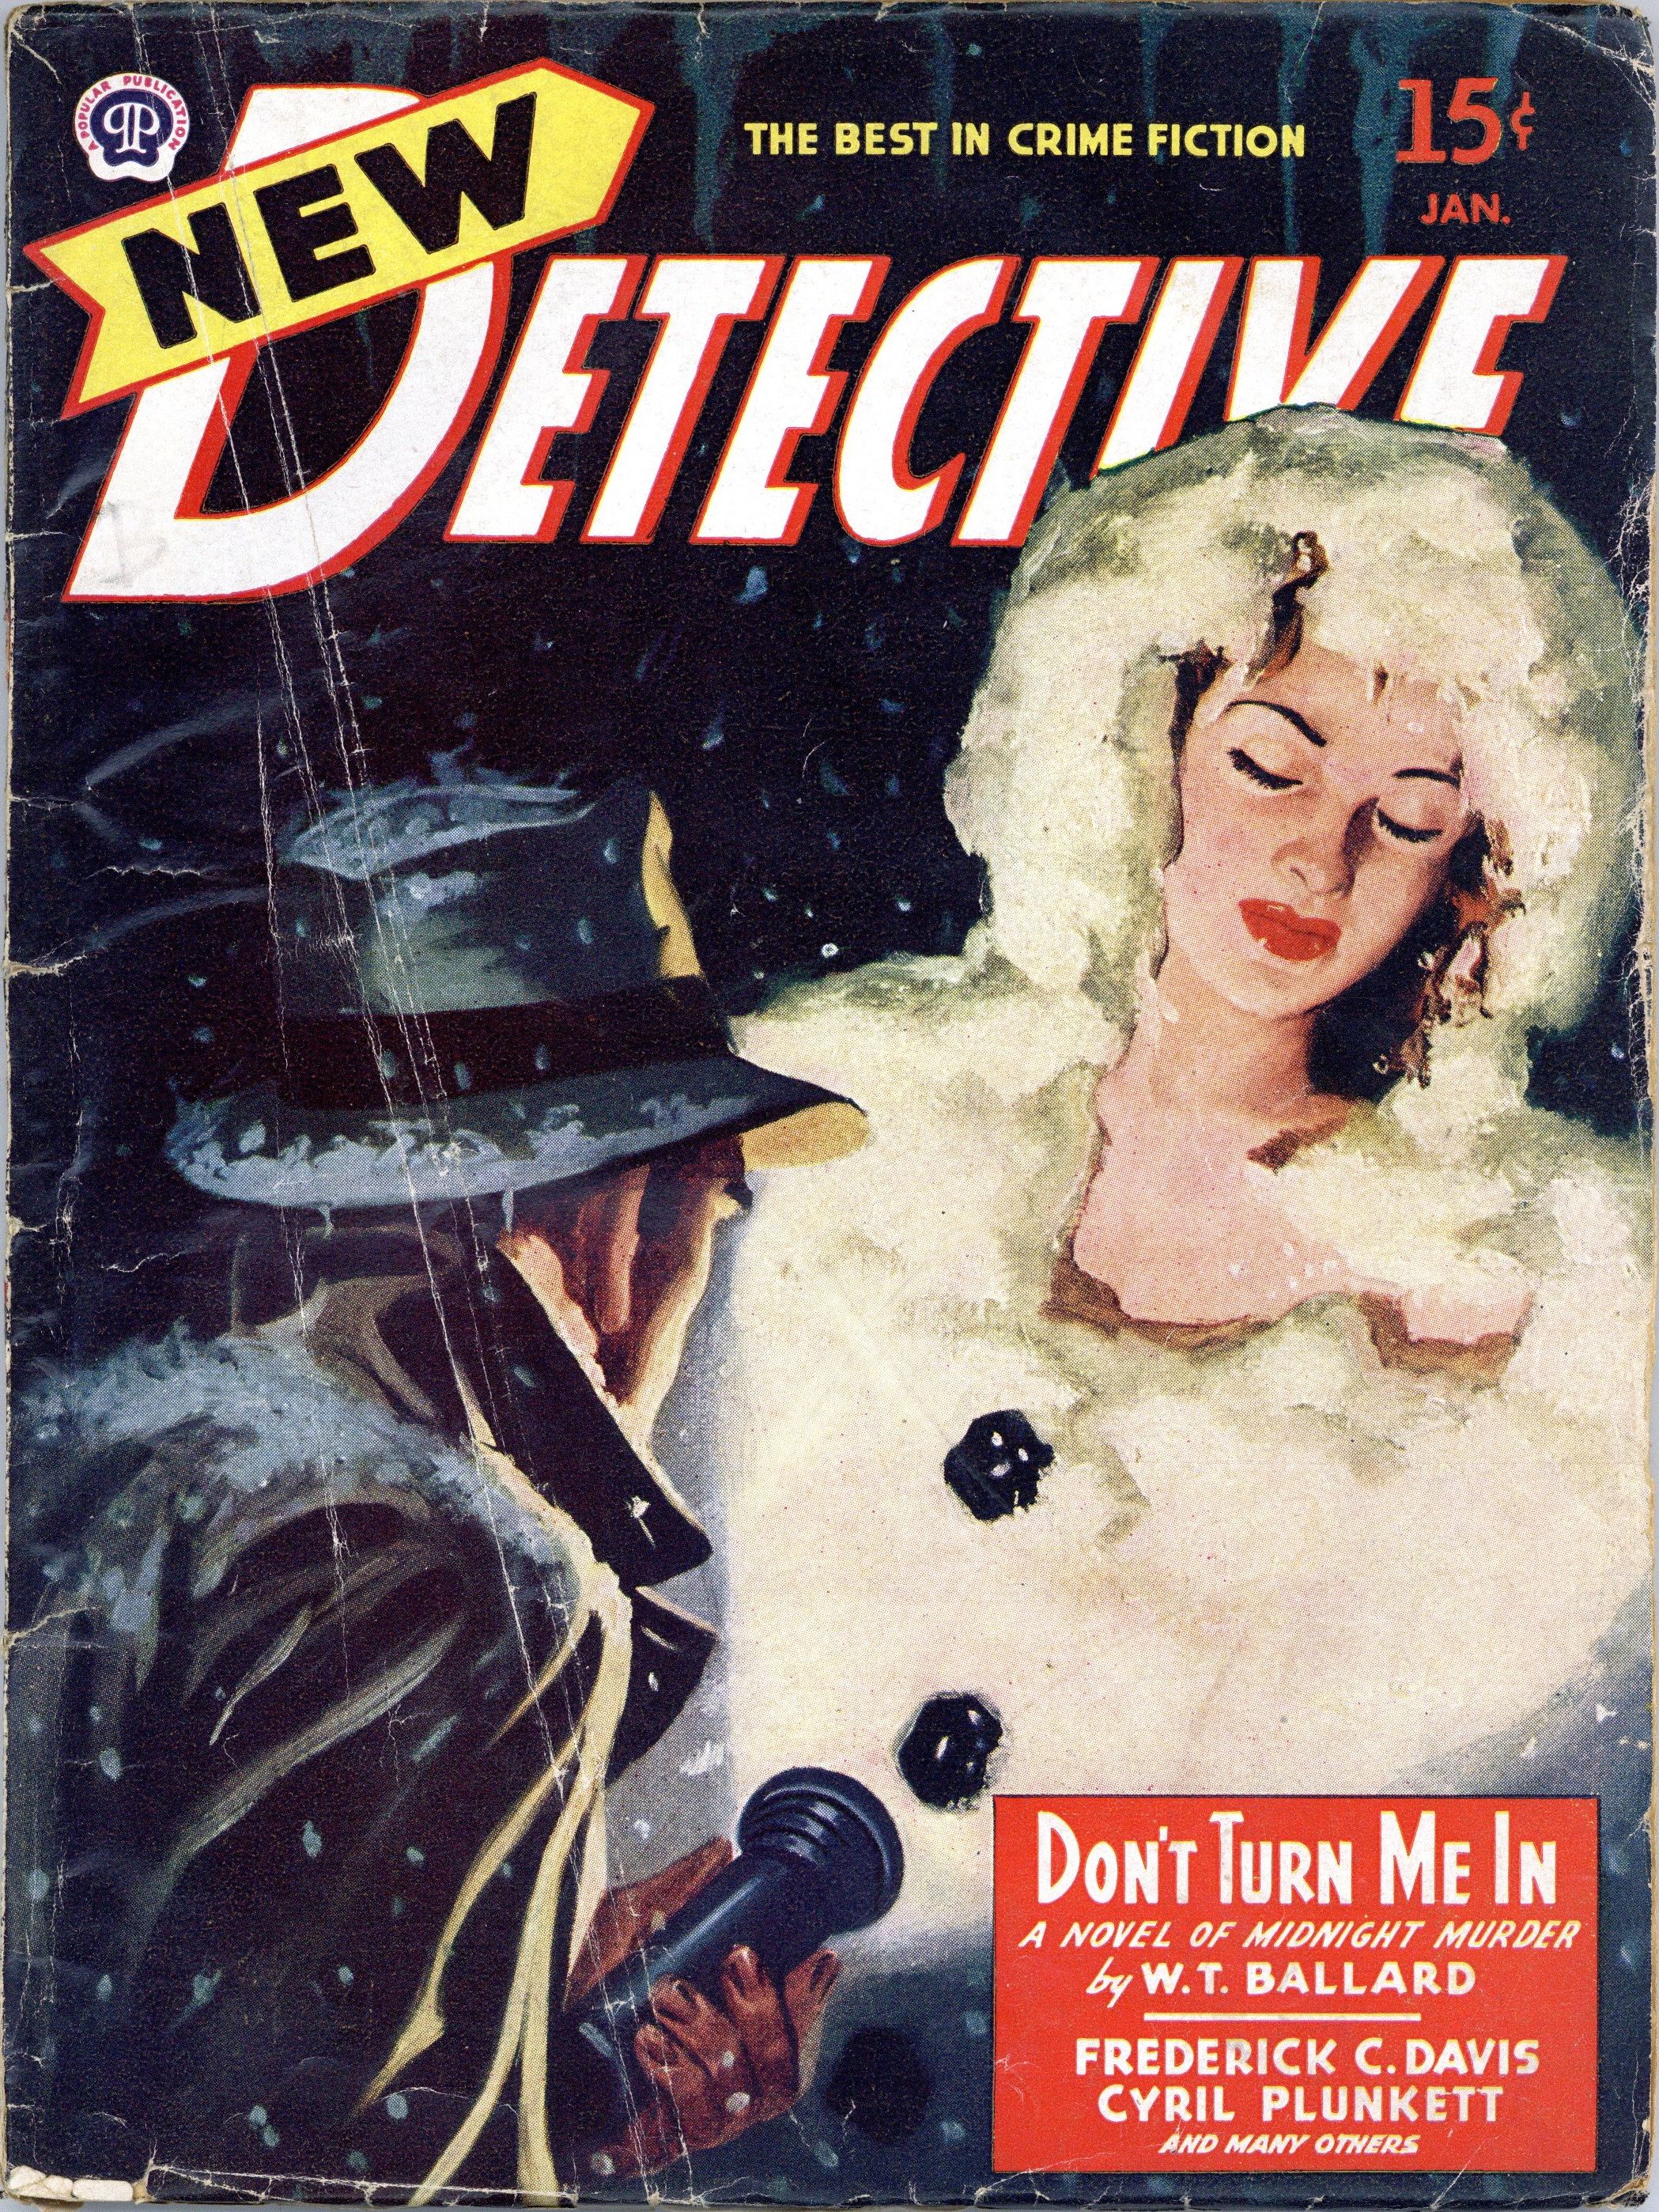 New Detective January 1946